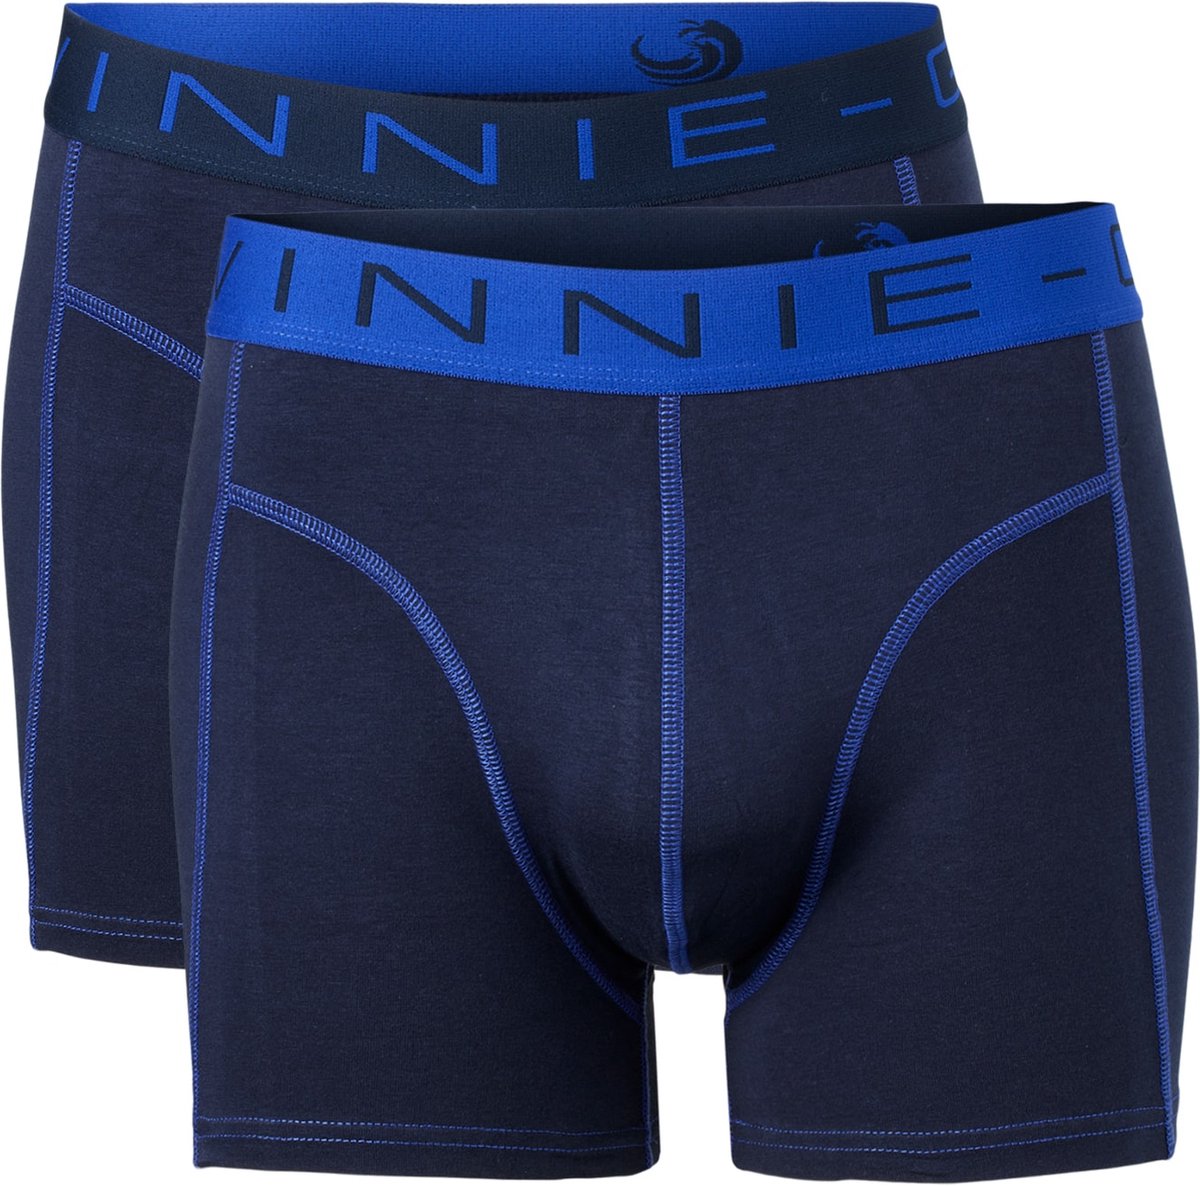 Vinnie-G Boxershorts 2-pack Navy/Royal Blue - Maat L - Heren Onderbroeken Donkerblauw - Geen irritante Labels - Katoen heren ondergoed